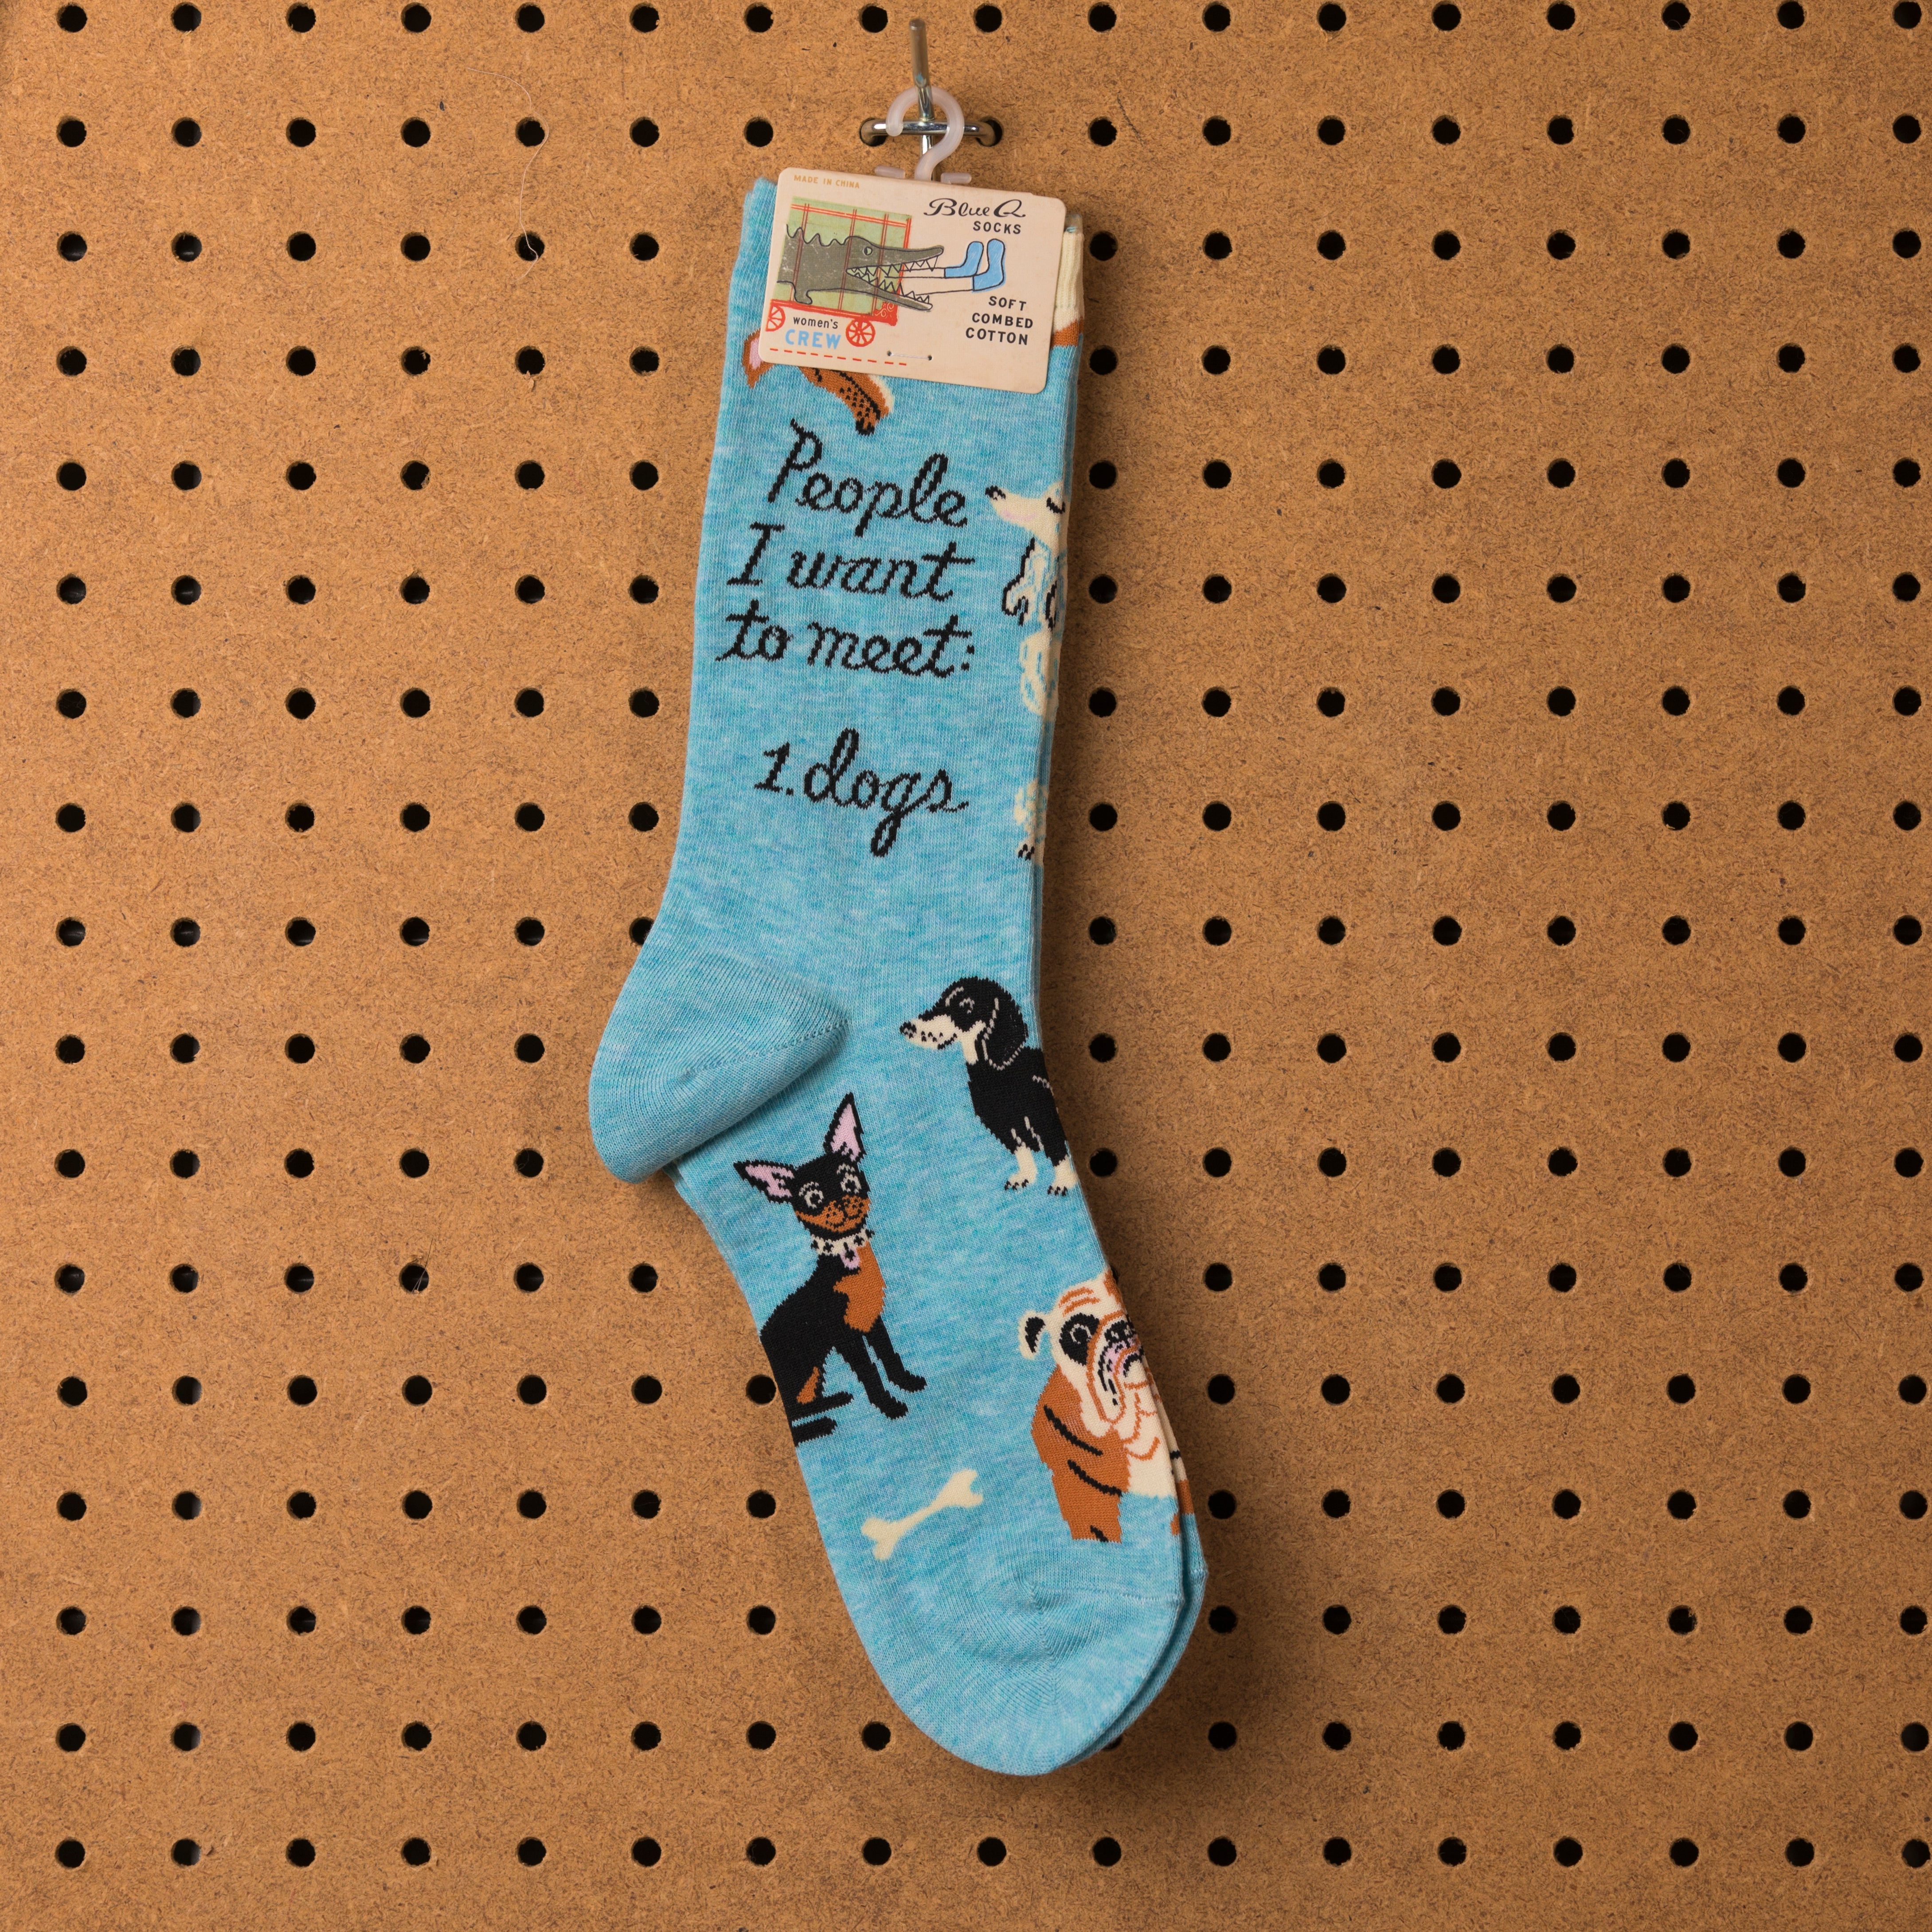 Blue Q People I Want To Meet: 1.Dogs  Socks - Women's Socks  - Women's Clothing Store - Women's Accessories - Ladies Boutique - O KOO RAN - Big Bear Lake California